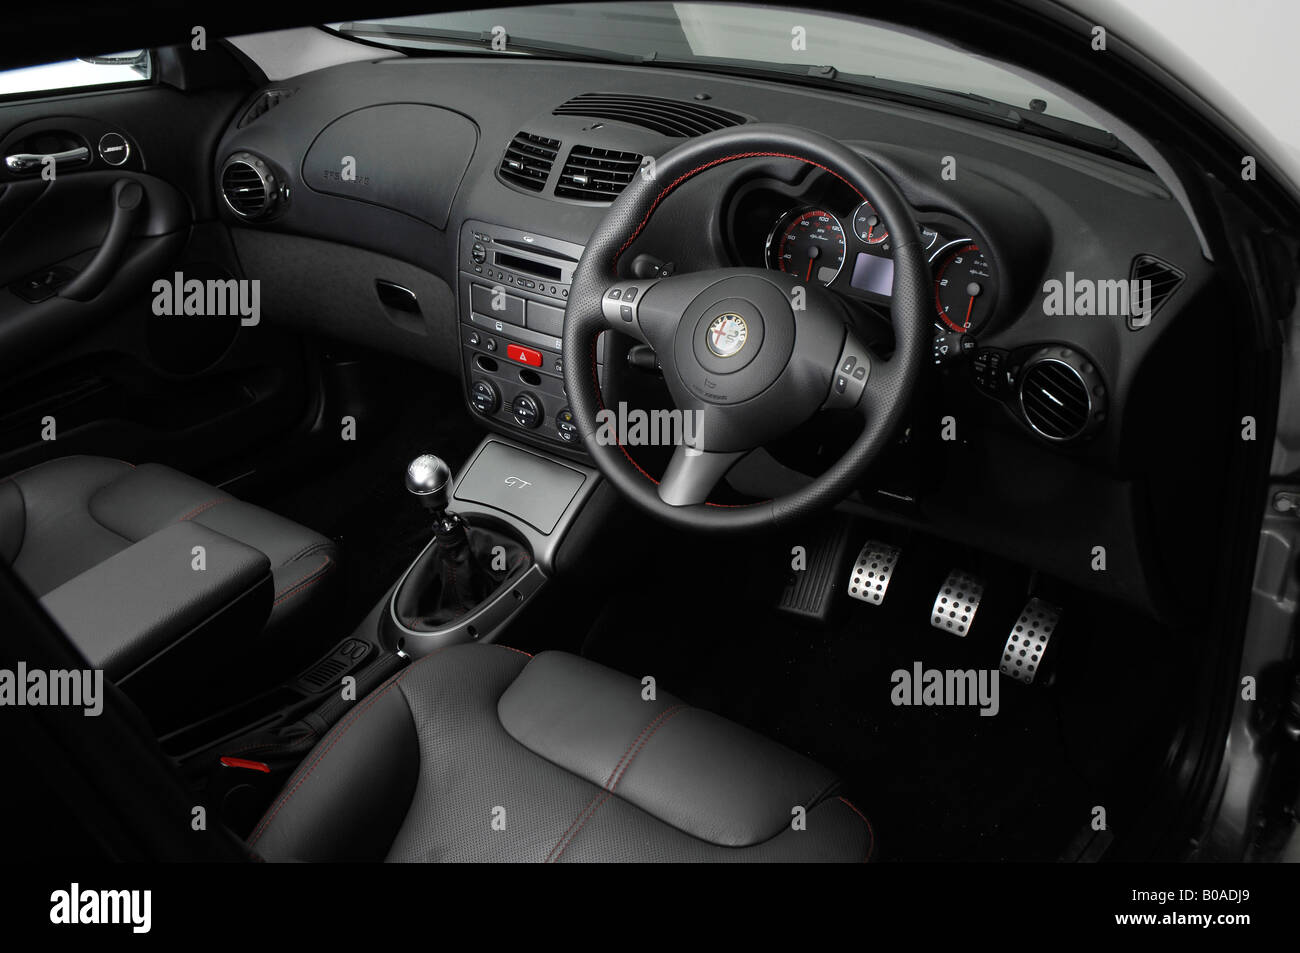 2007 Alfa Romeo Gt Interieur Stockfoto Bild 17440593 Alamy